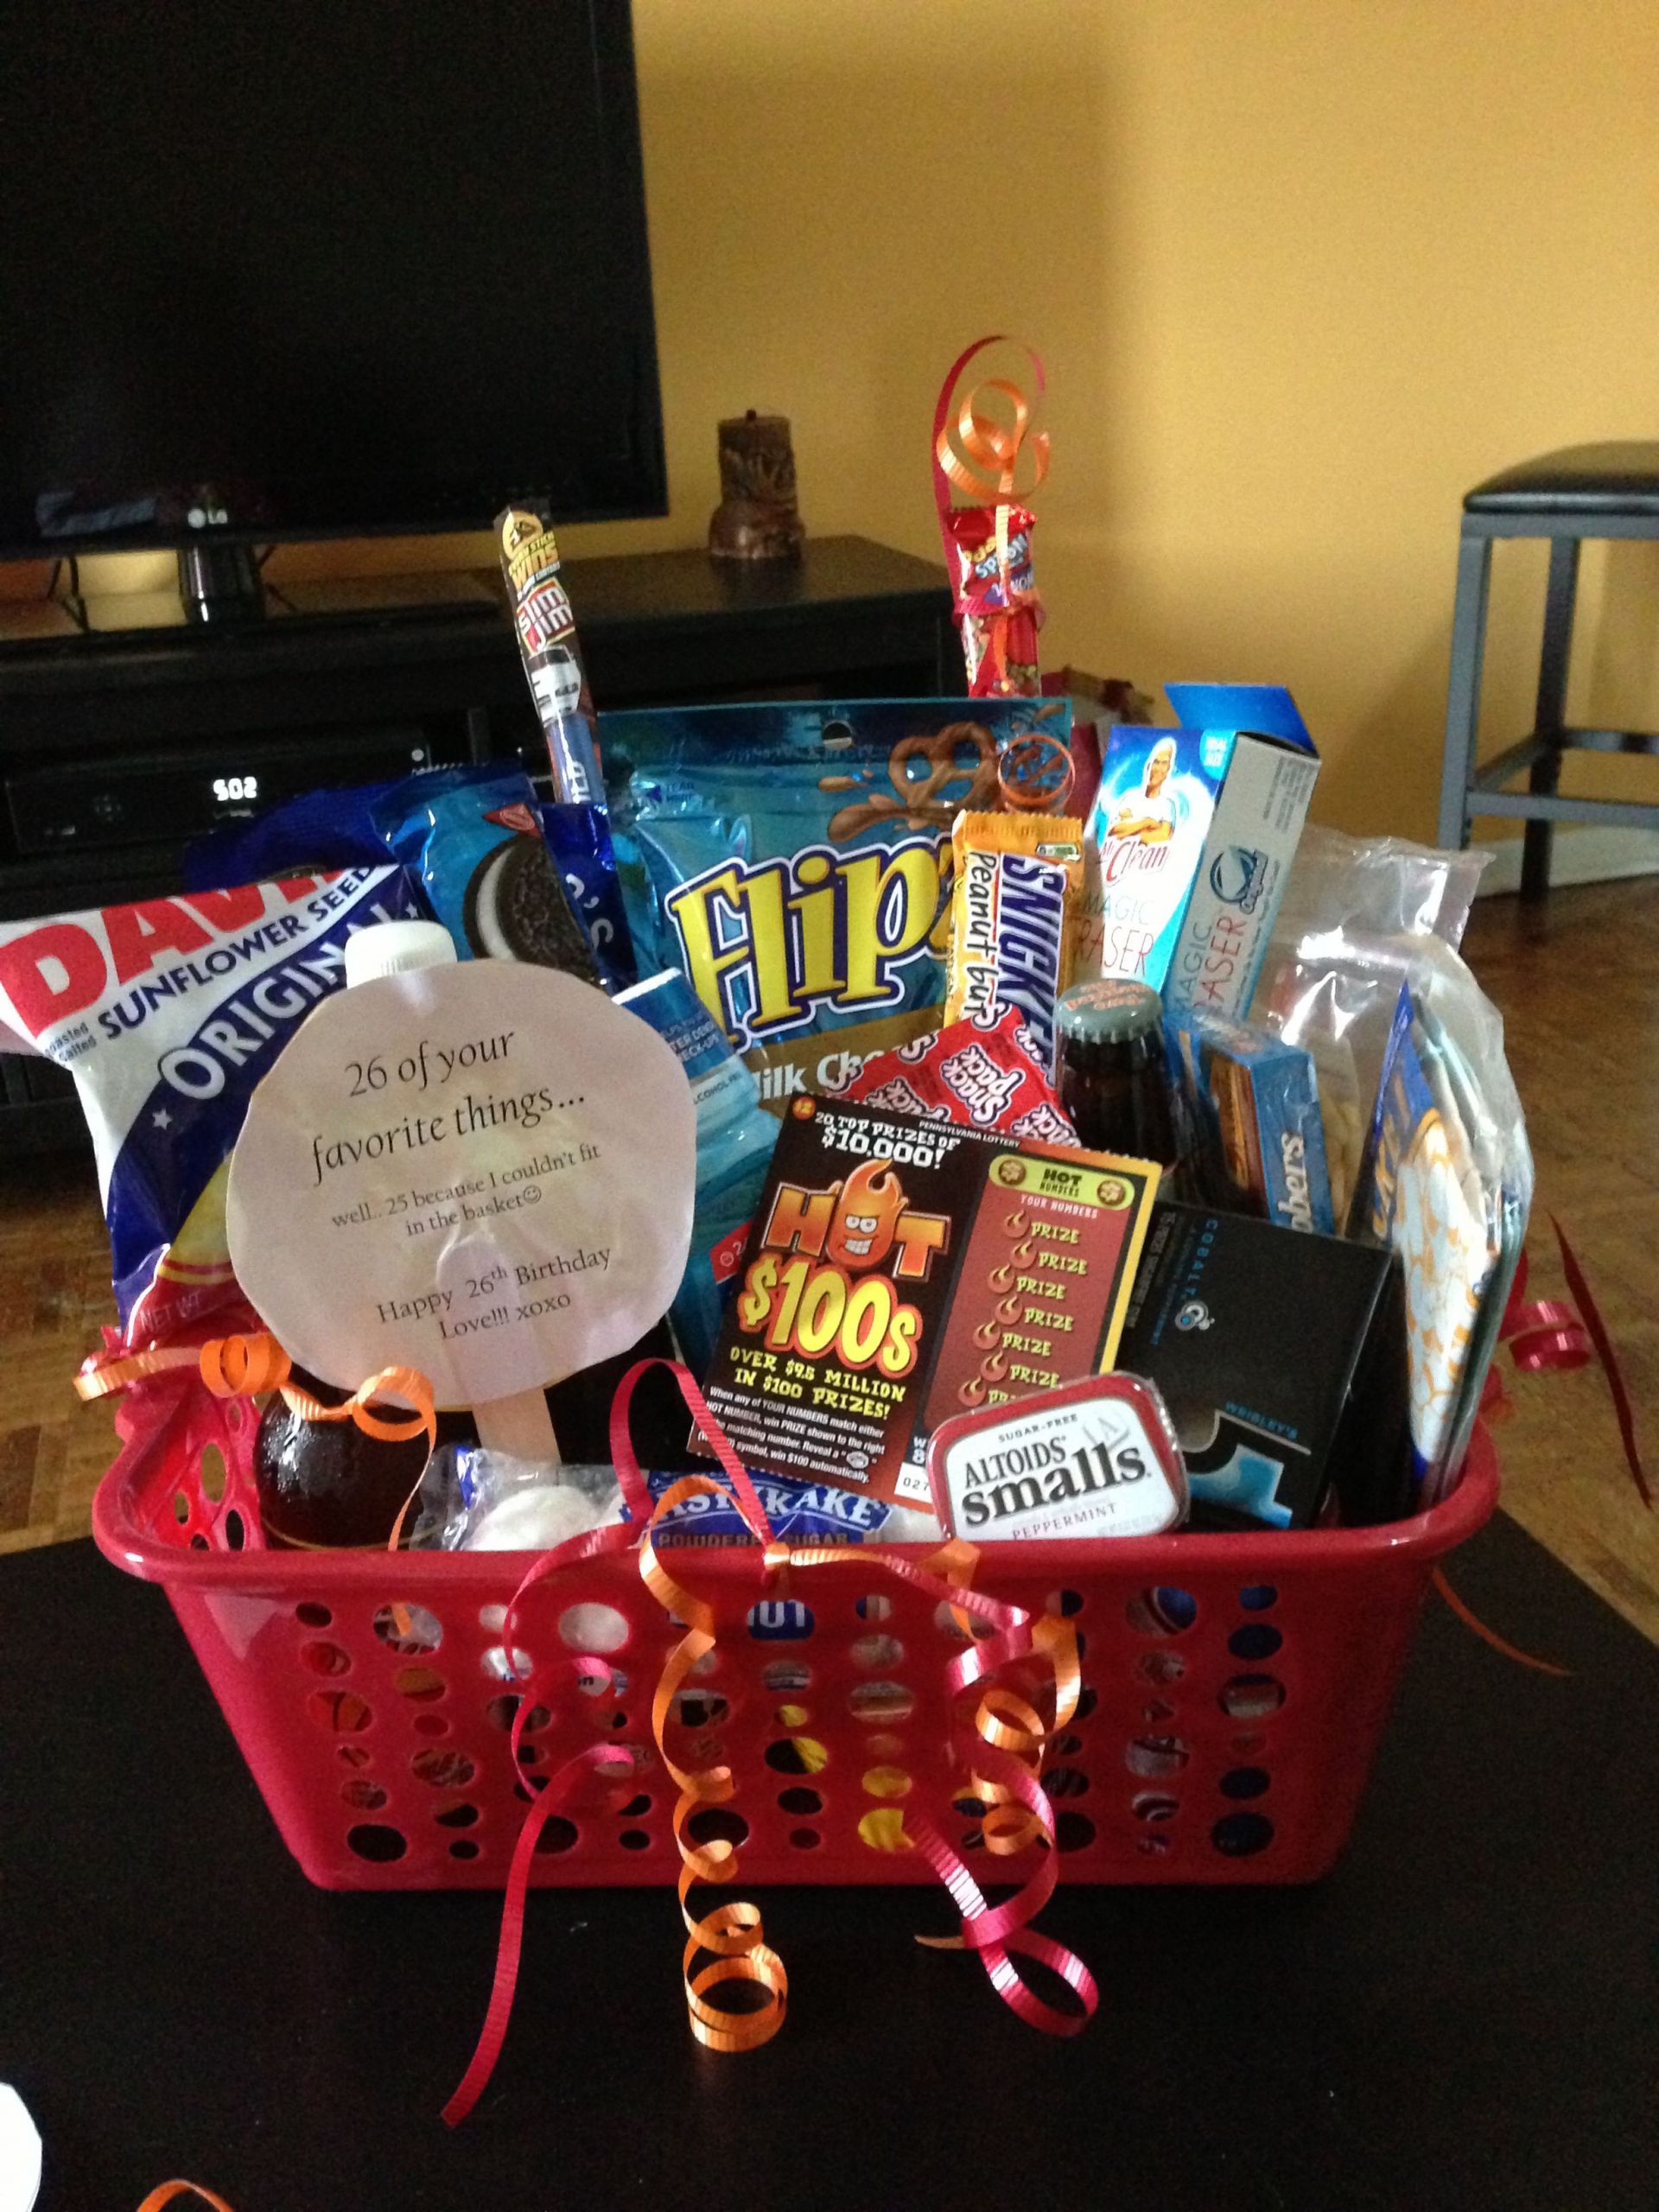 Gift Basket Ideas For Boyfriends
 Boyfriend birthday basket 26 of his favorite things for